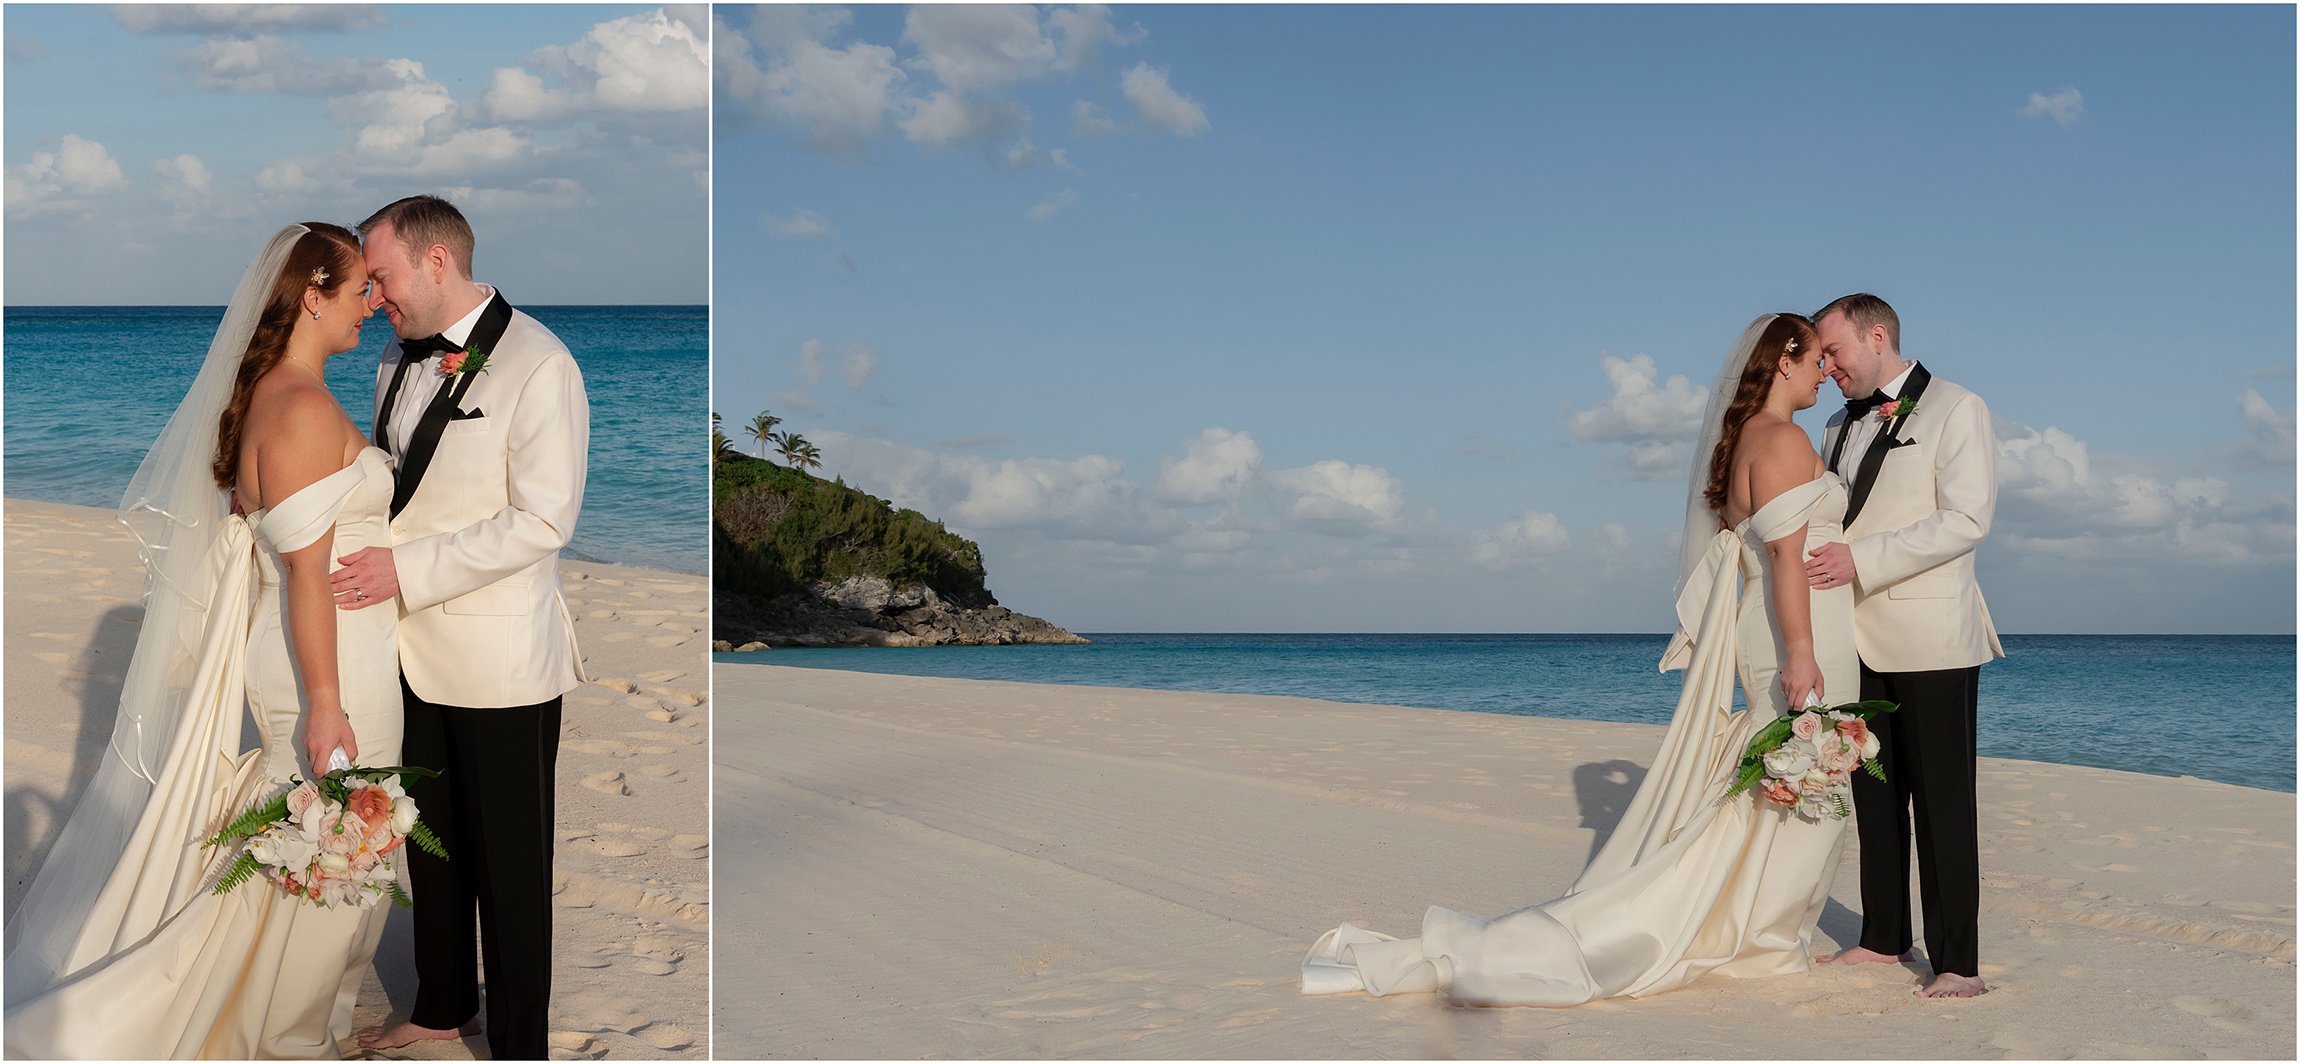 Rosewood Bermuda Wedding Photographer_©FianderFoto_066.jpg